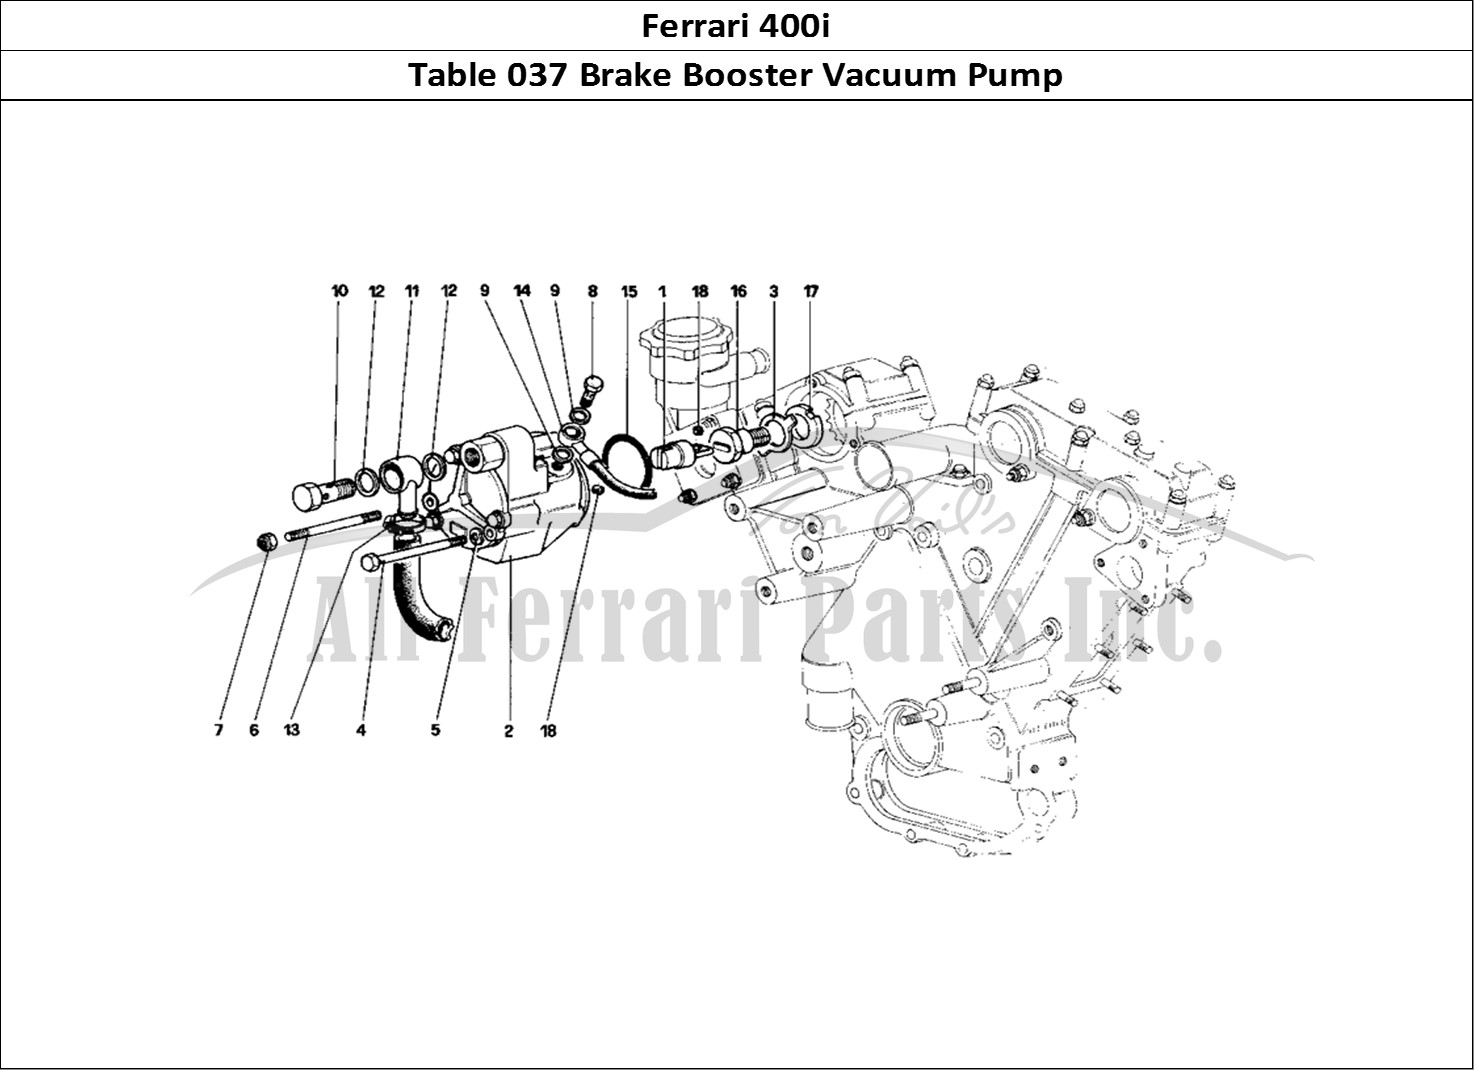 Ferrari Parts Ferrari 400i (1983 Mechanical) Page 037 Brake Booster Vacuum Pump